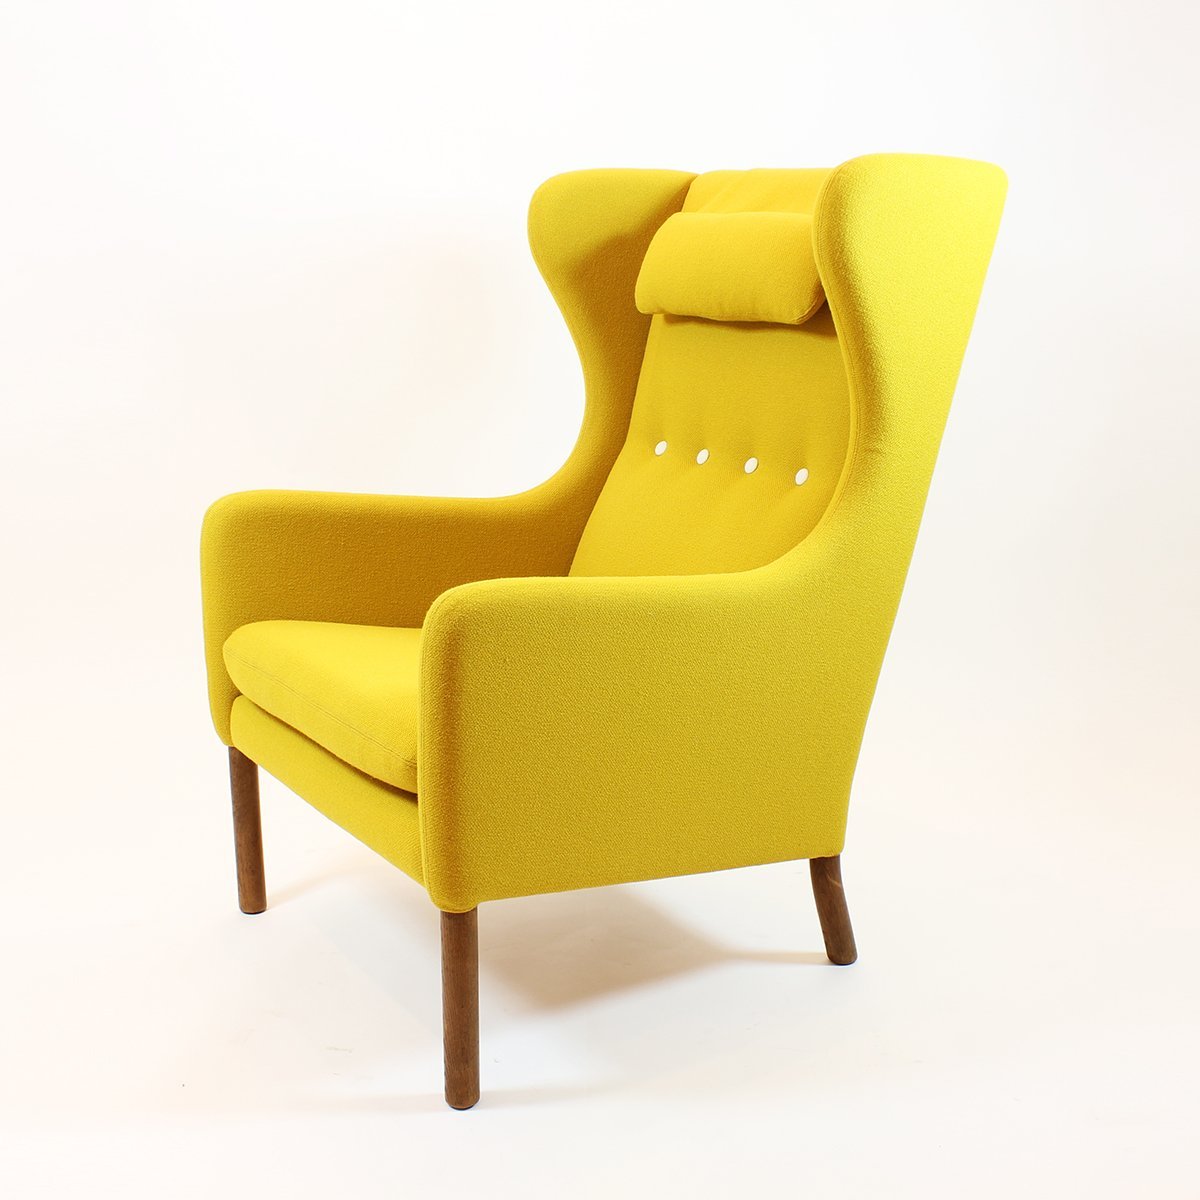 Yellow chair. Кресло МИД сенчури. Кресло МИД сенчури желтое. Желтое кресло из икеа. Желтое кресло МИД Сентури Модерн.